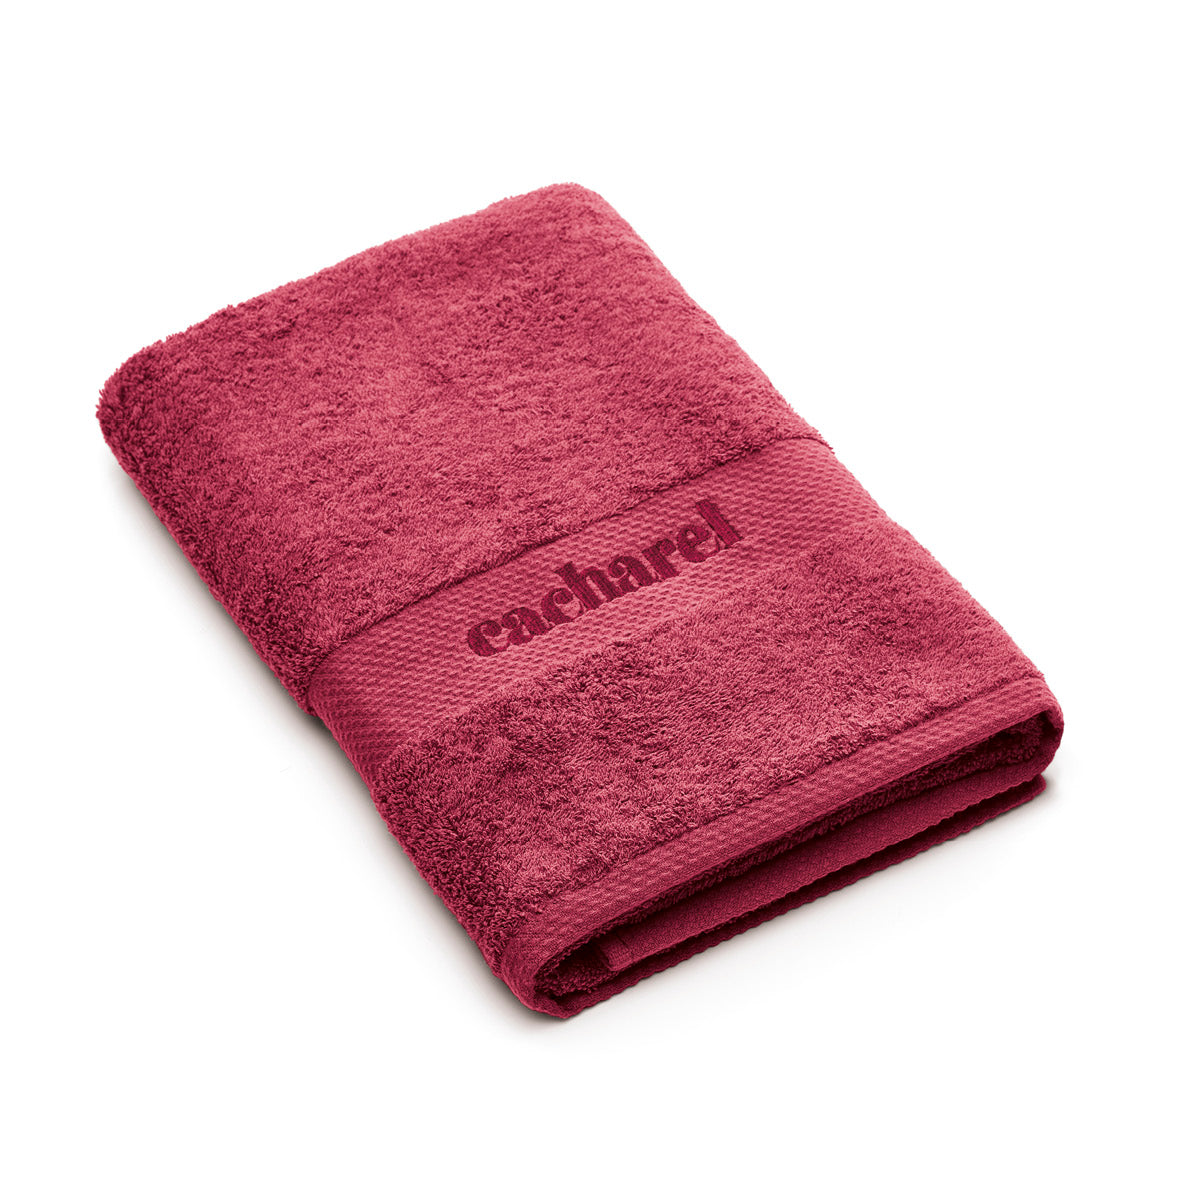 Maxi bath towel - 100 x 150 cm Blush pink